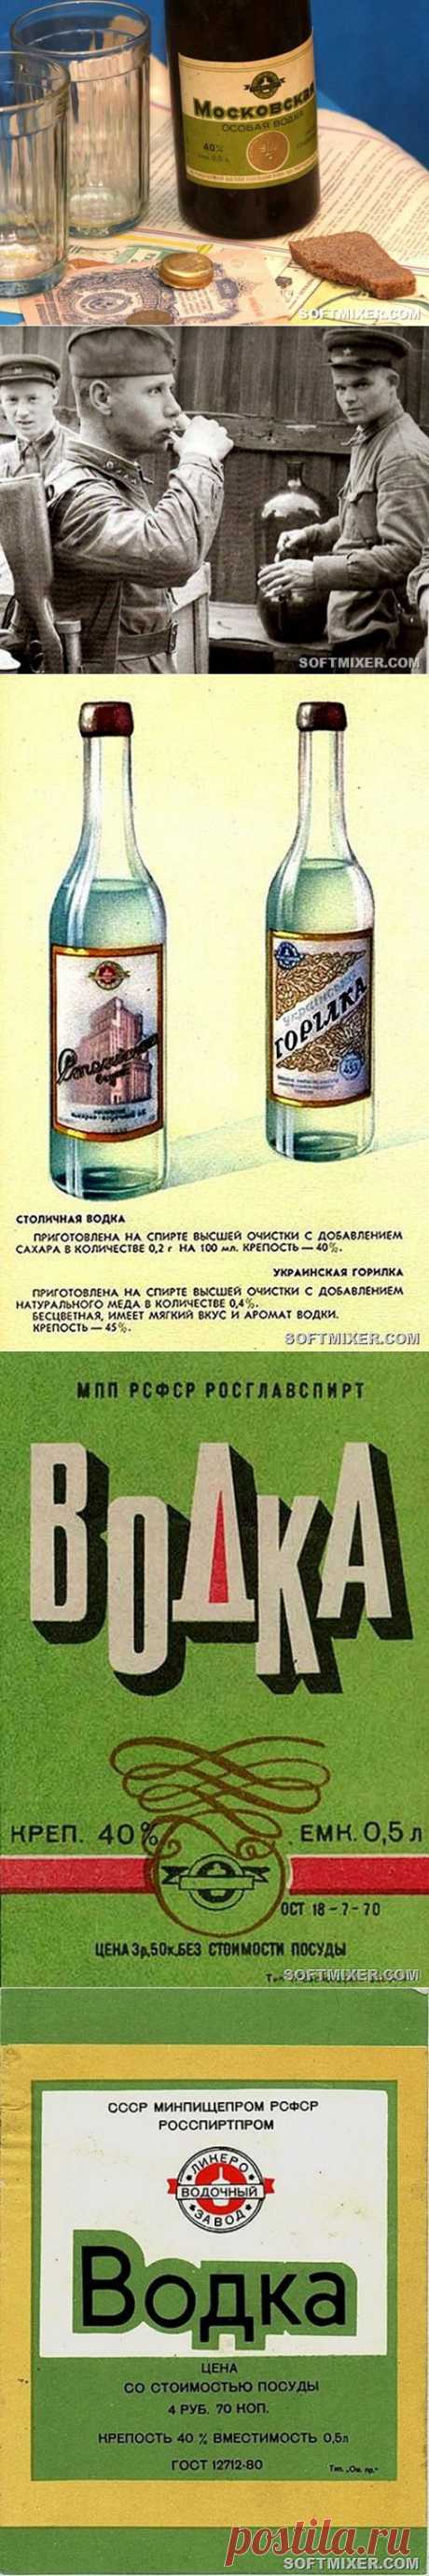 Как менялись цены на водку / Назад в СССР / Back in USSR